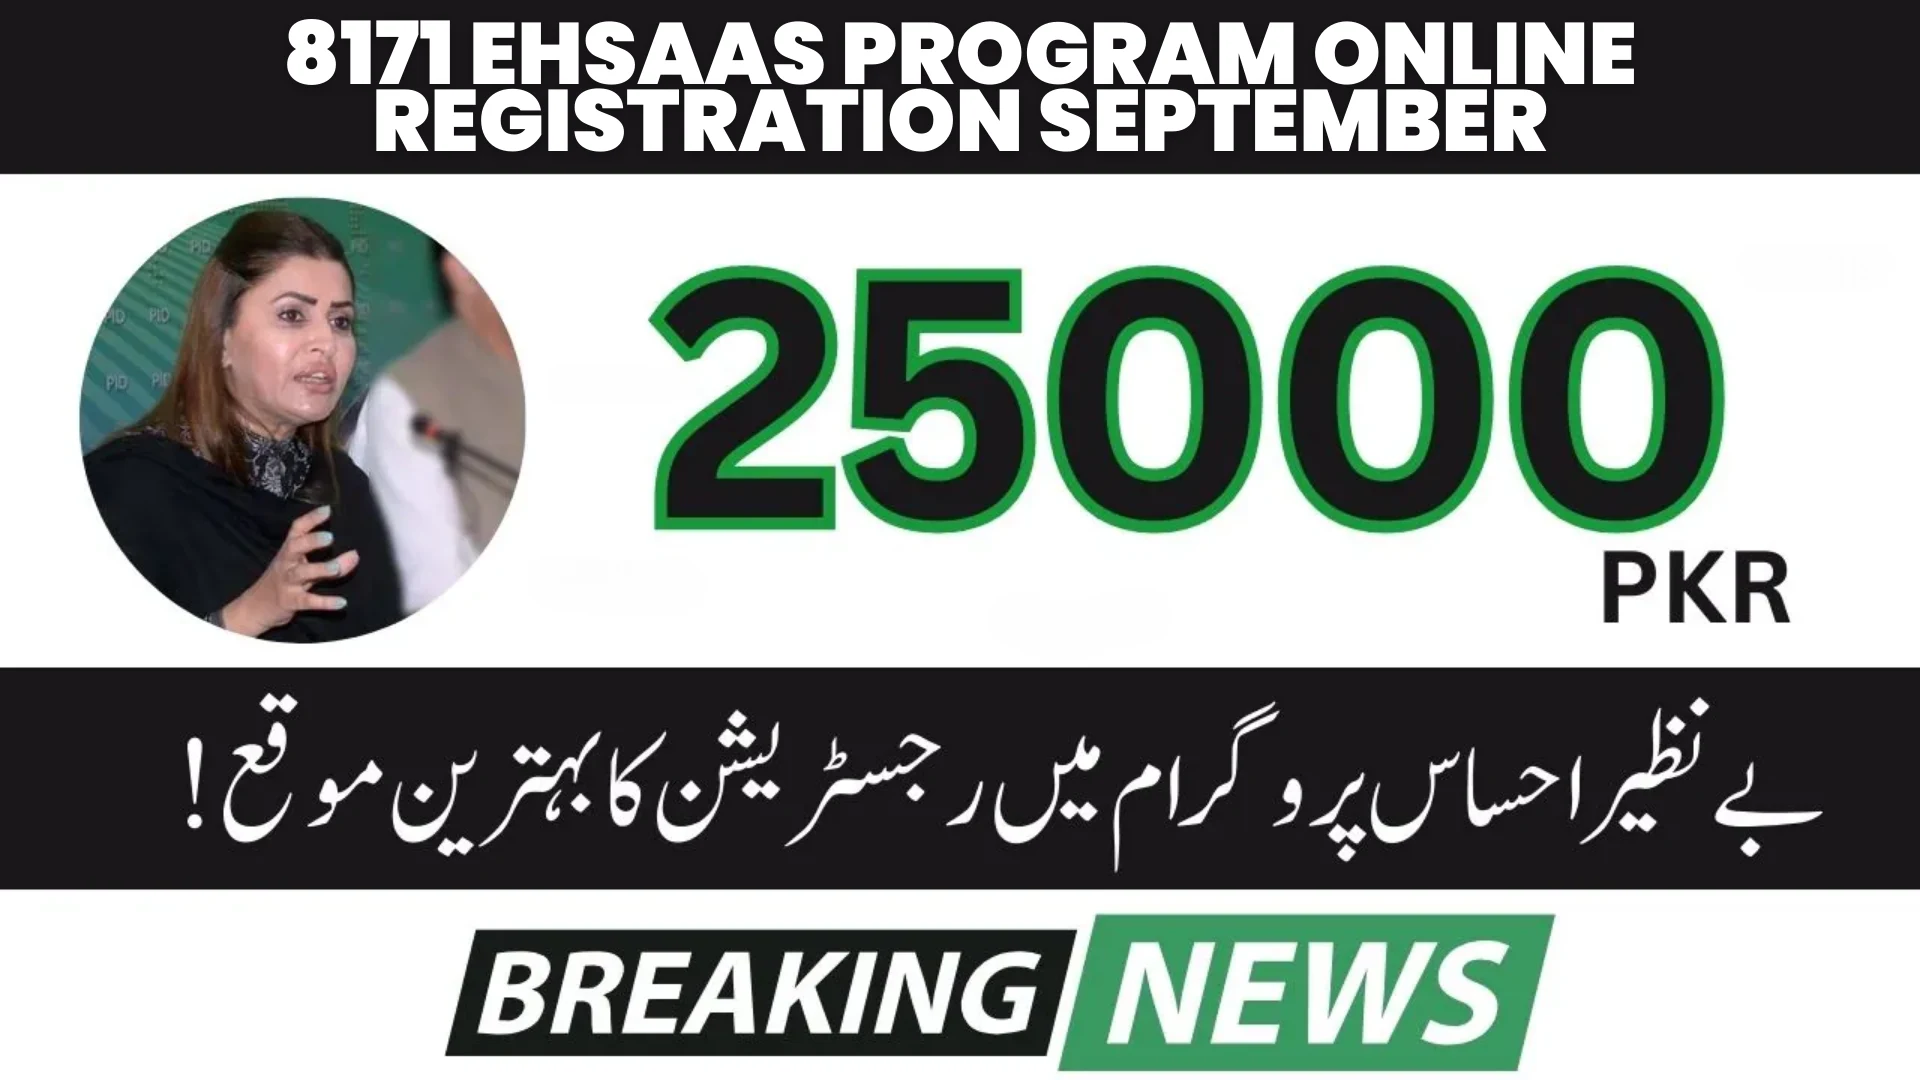 8171 Ehsaas Program Online Registration September